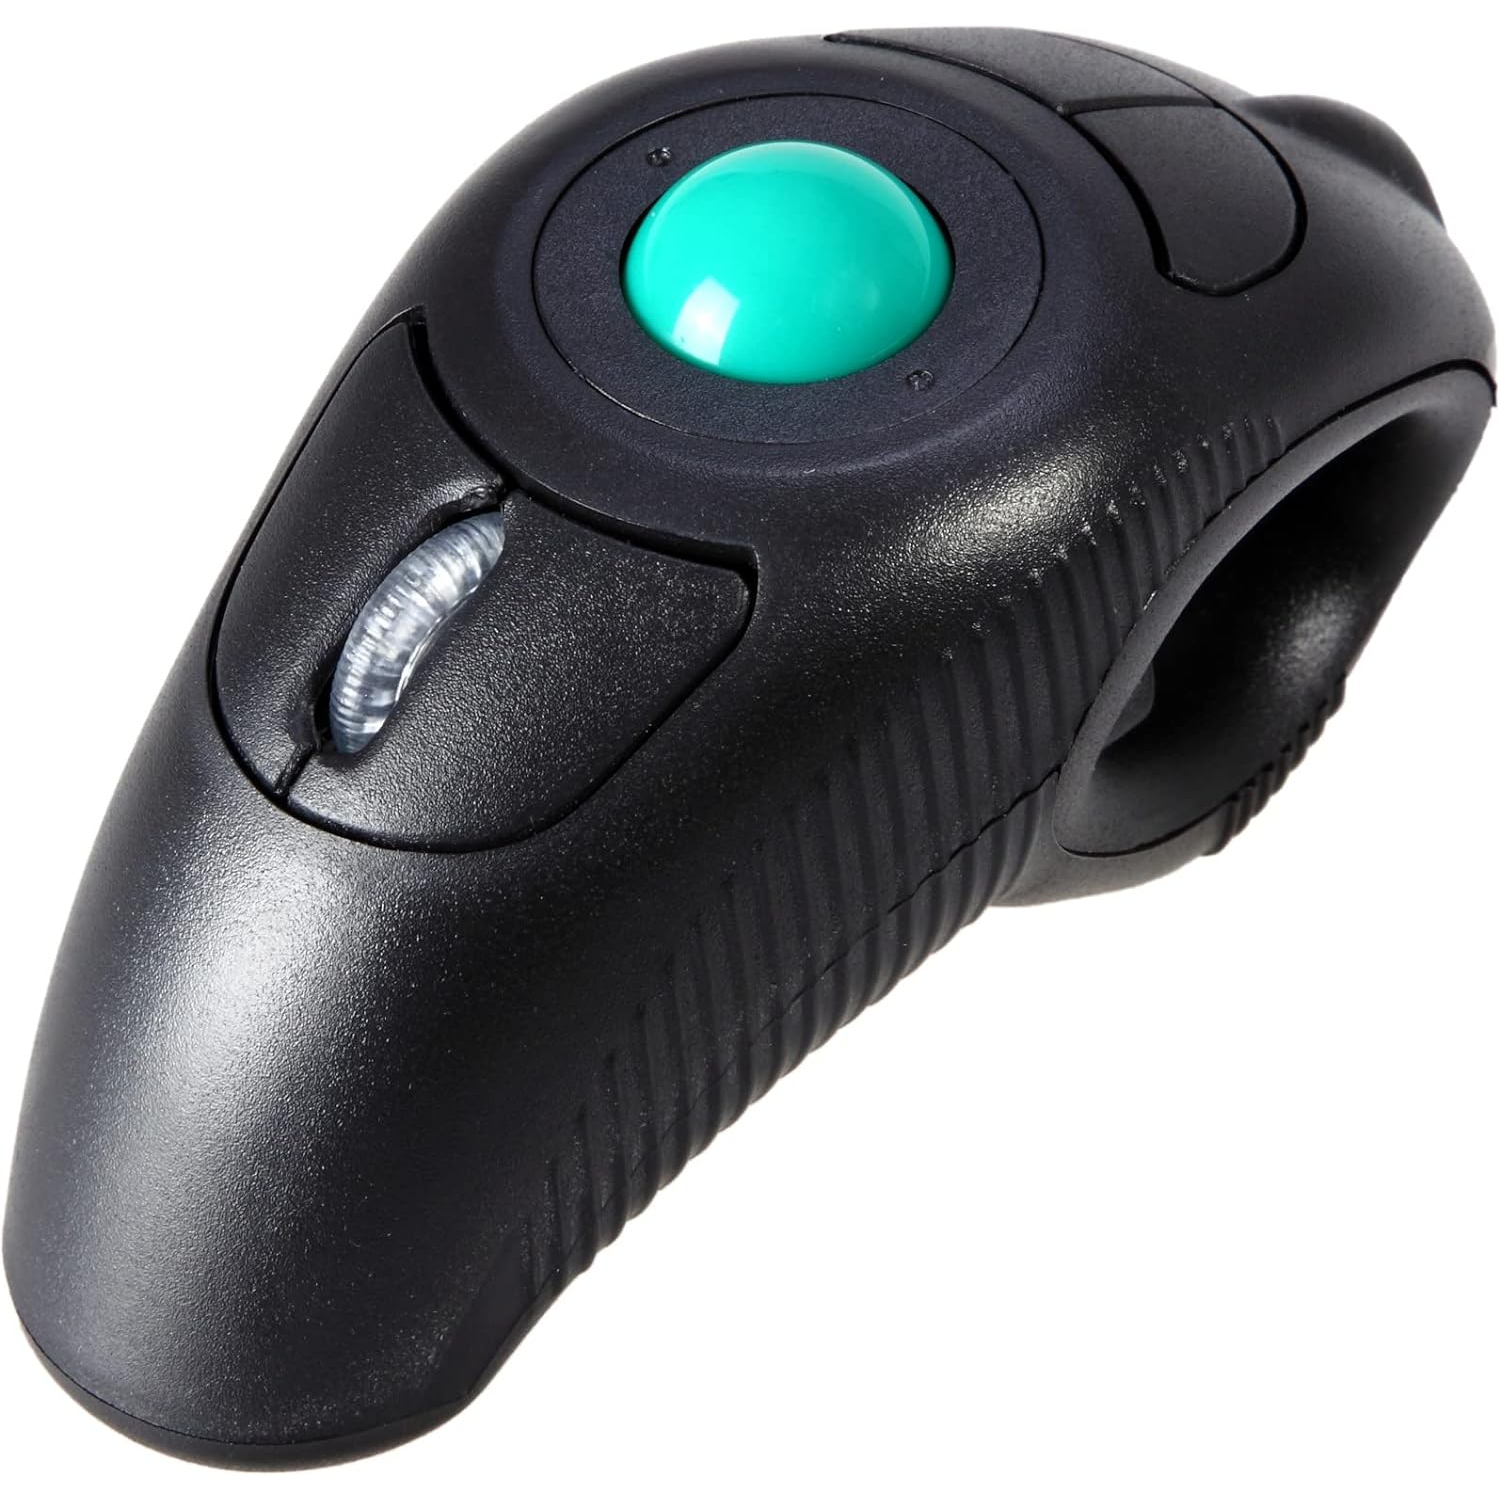 E 2.4G Ergonomic Trackball Handheld Finger USB Mouse Wireless Optical Travel DPI Mice for PC Laptop Mac Left and Right Handed (Green Ball)